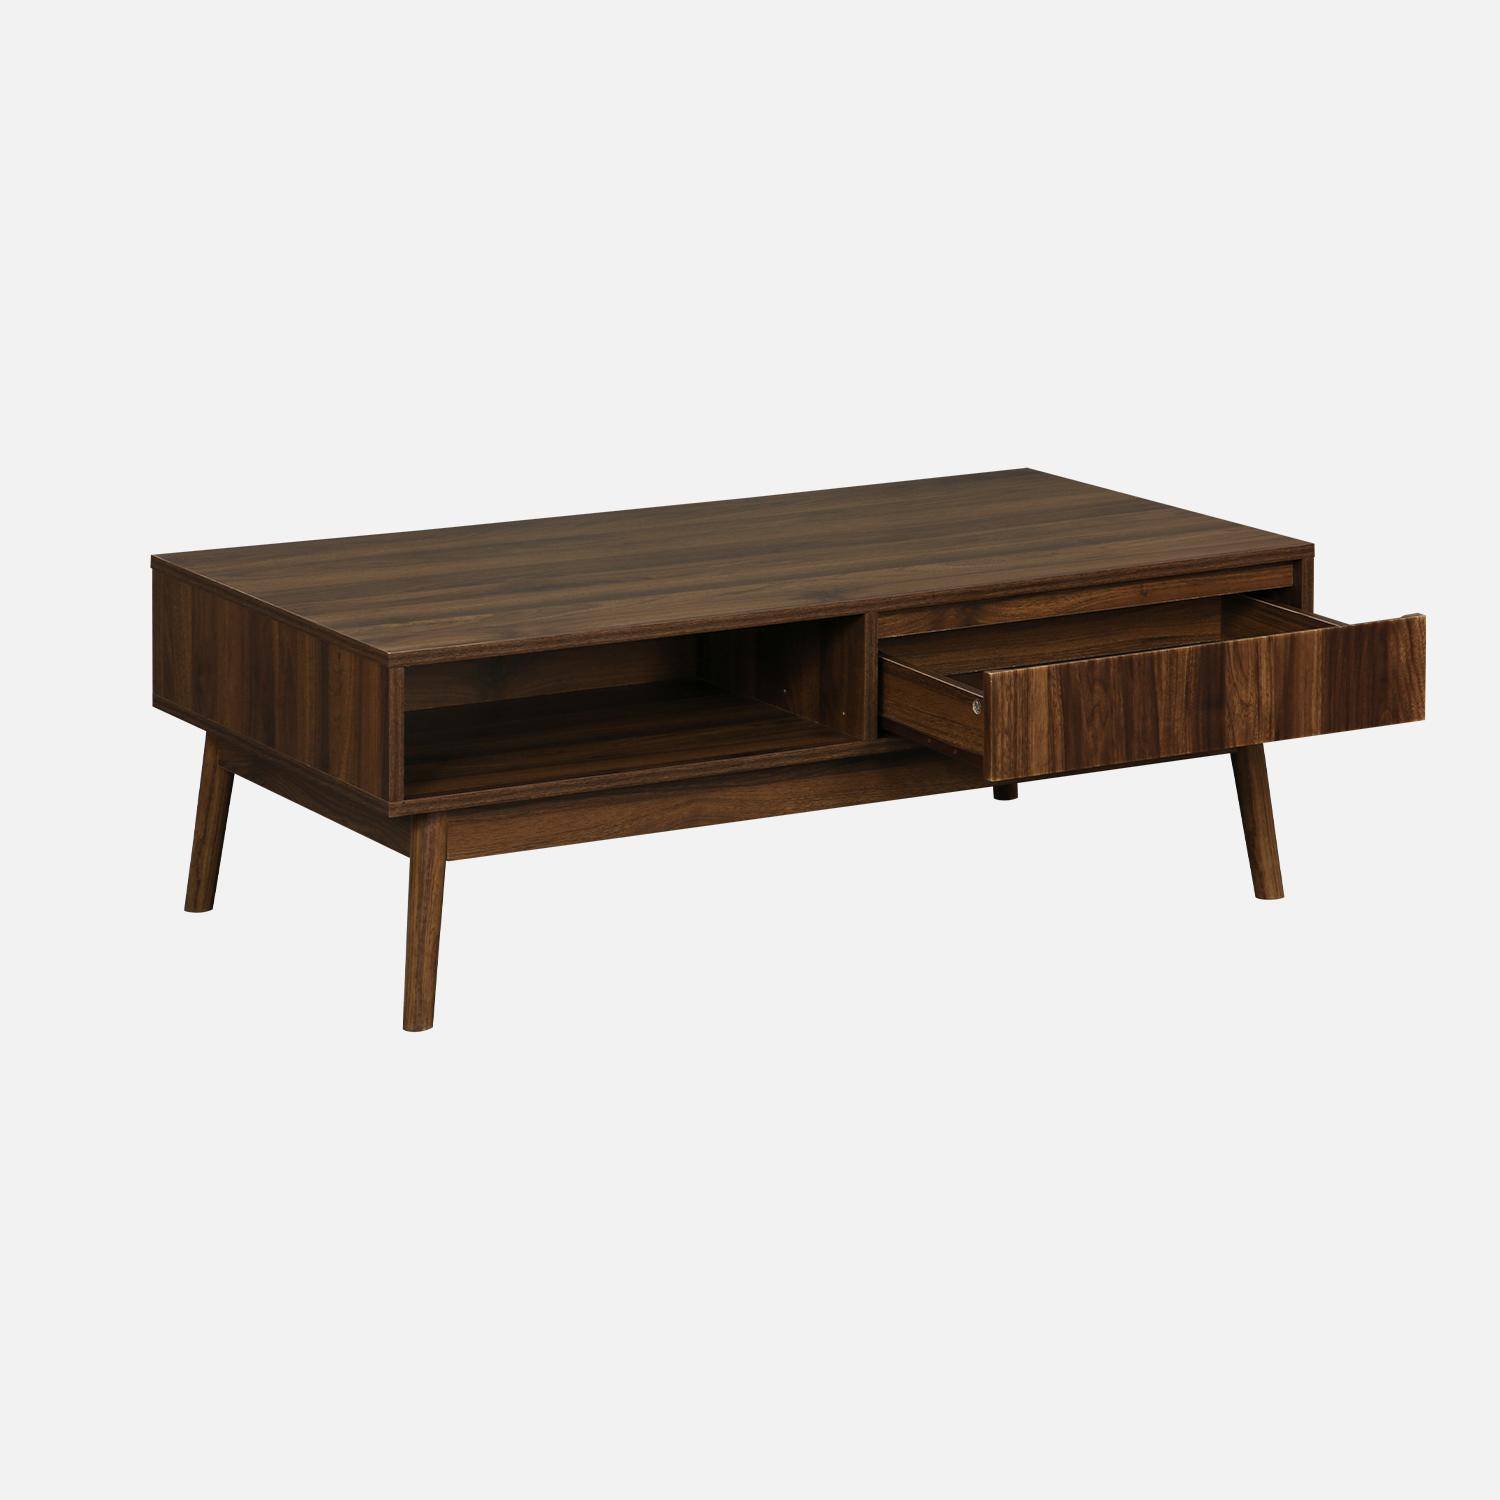 Wooden coffee table with one drawer storage, dark wood, L110xW59xH39cm,sweeek,Photo6